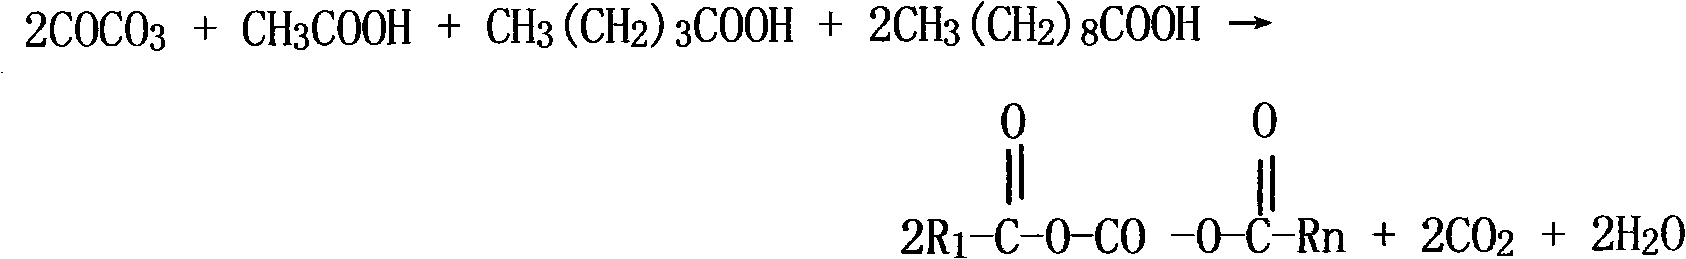 Preparation technique of cobalt decanoate by hybrid reaction of cobaltous carbonate and organic acid